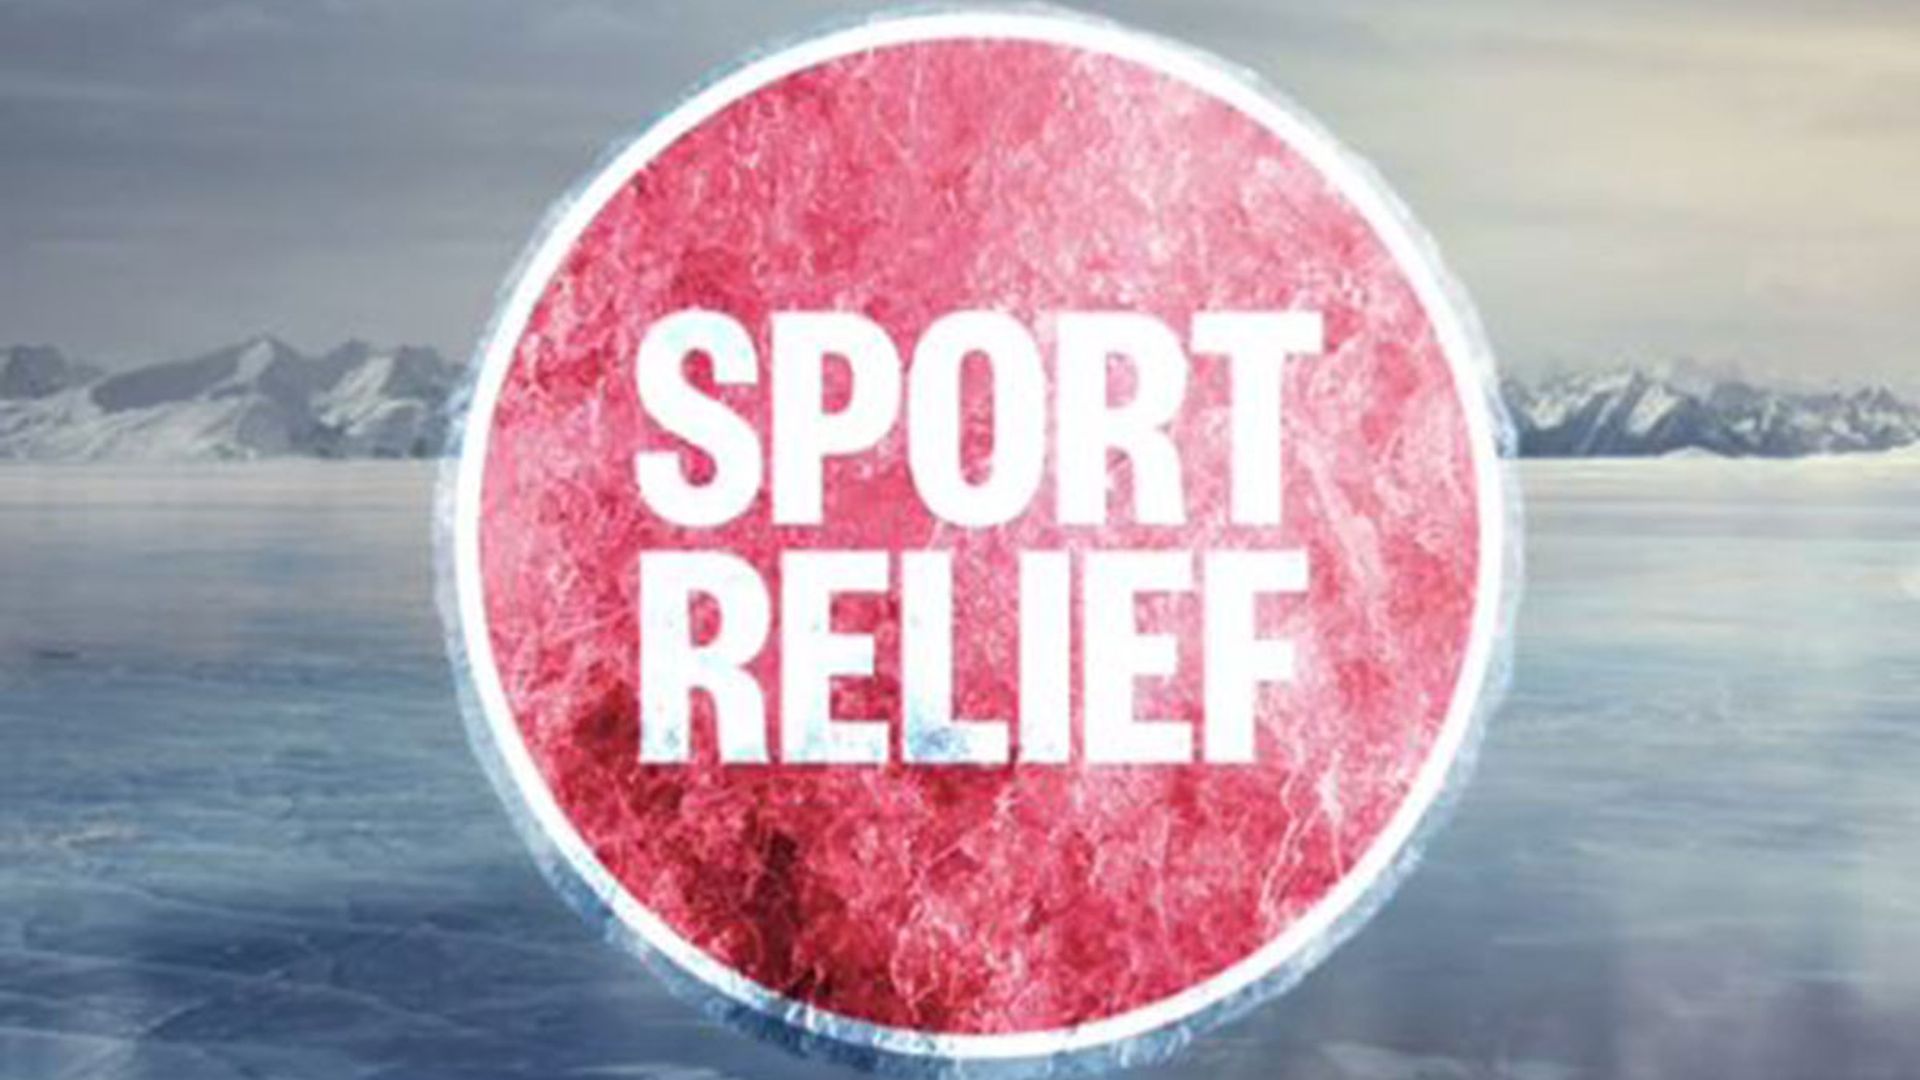 sport relief logo